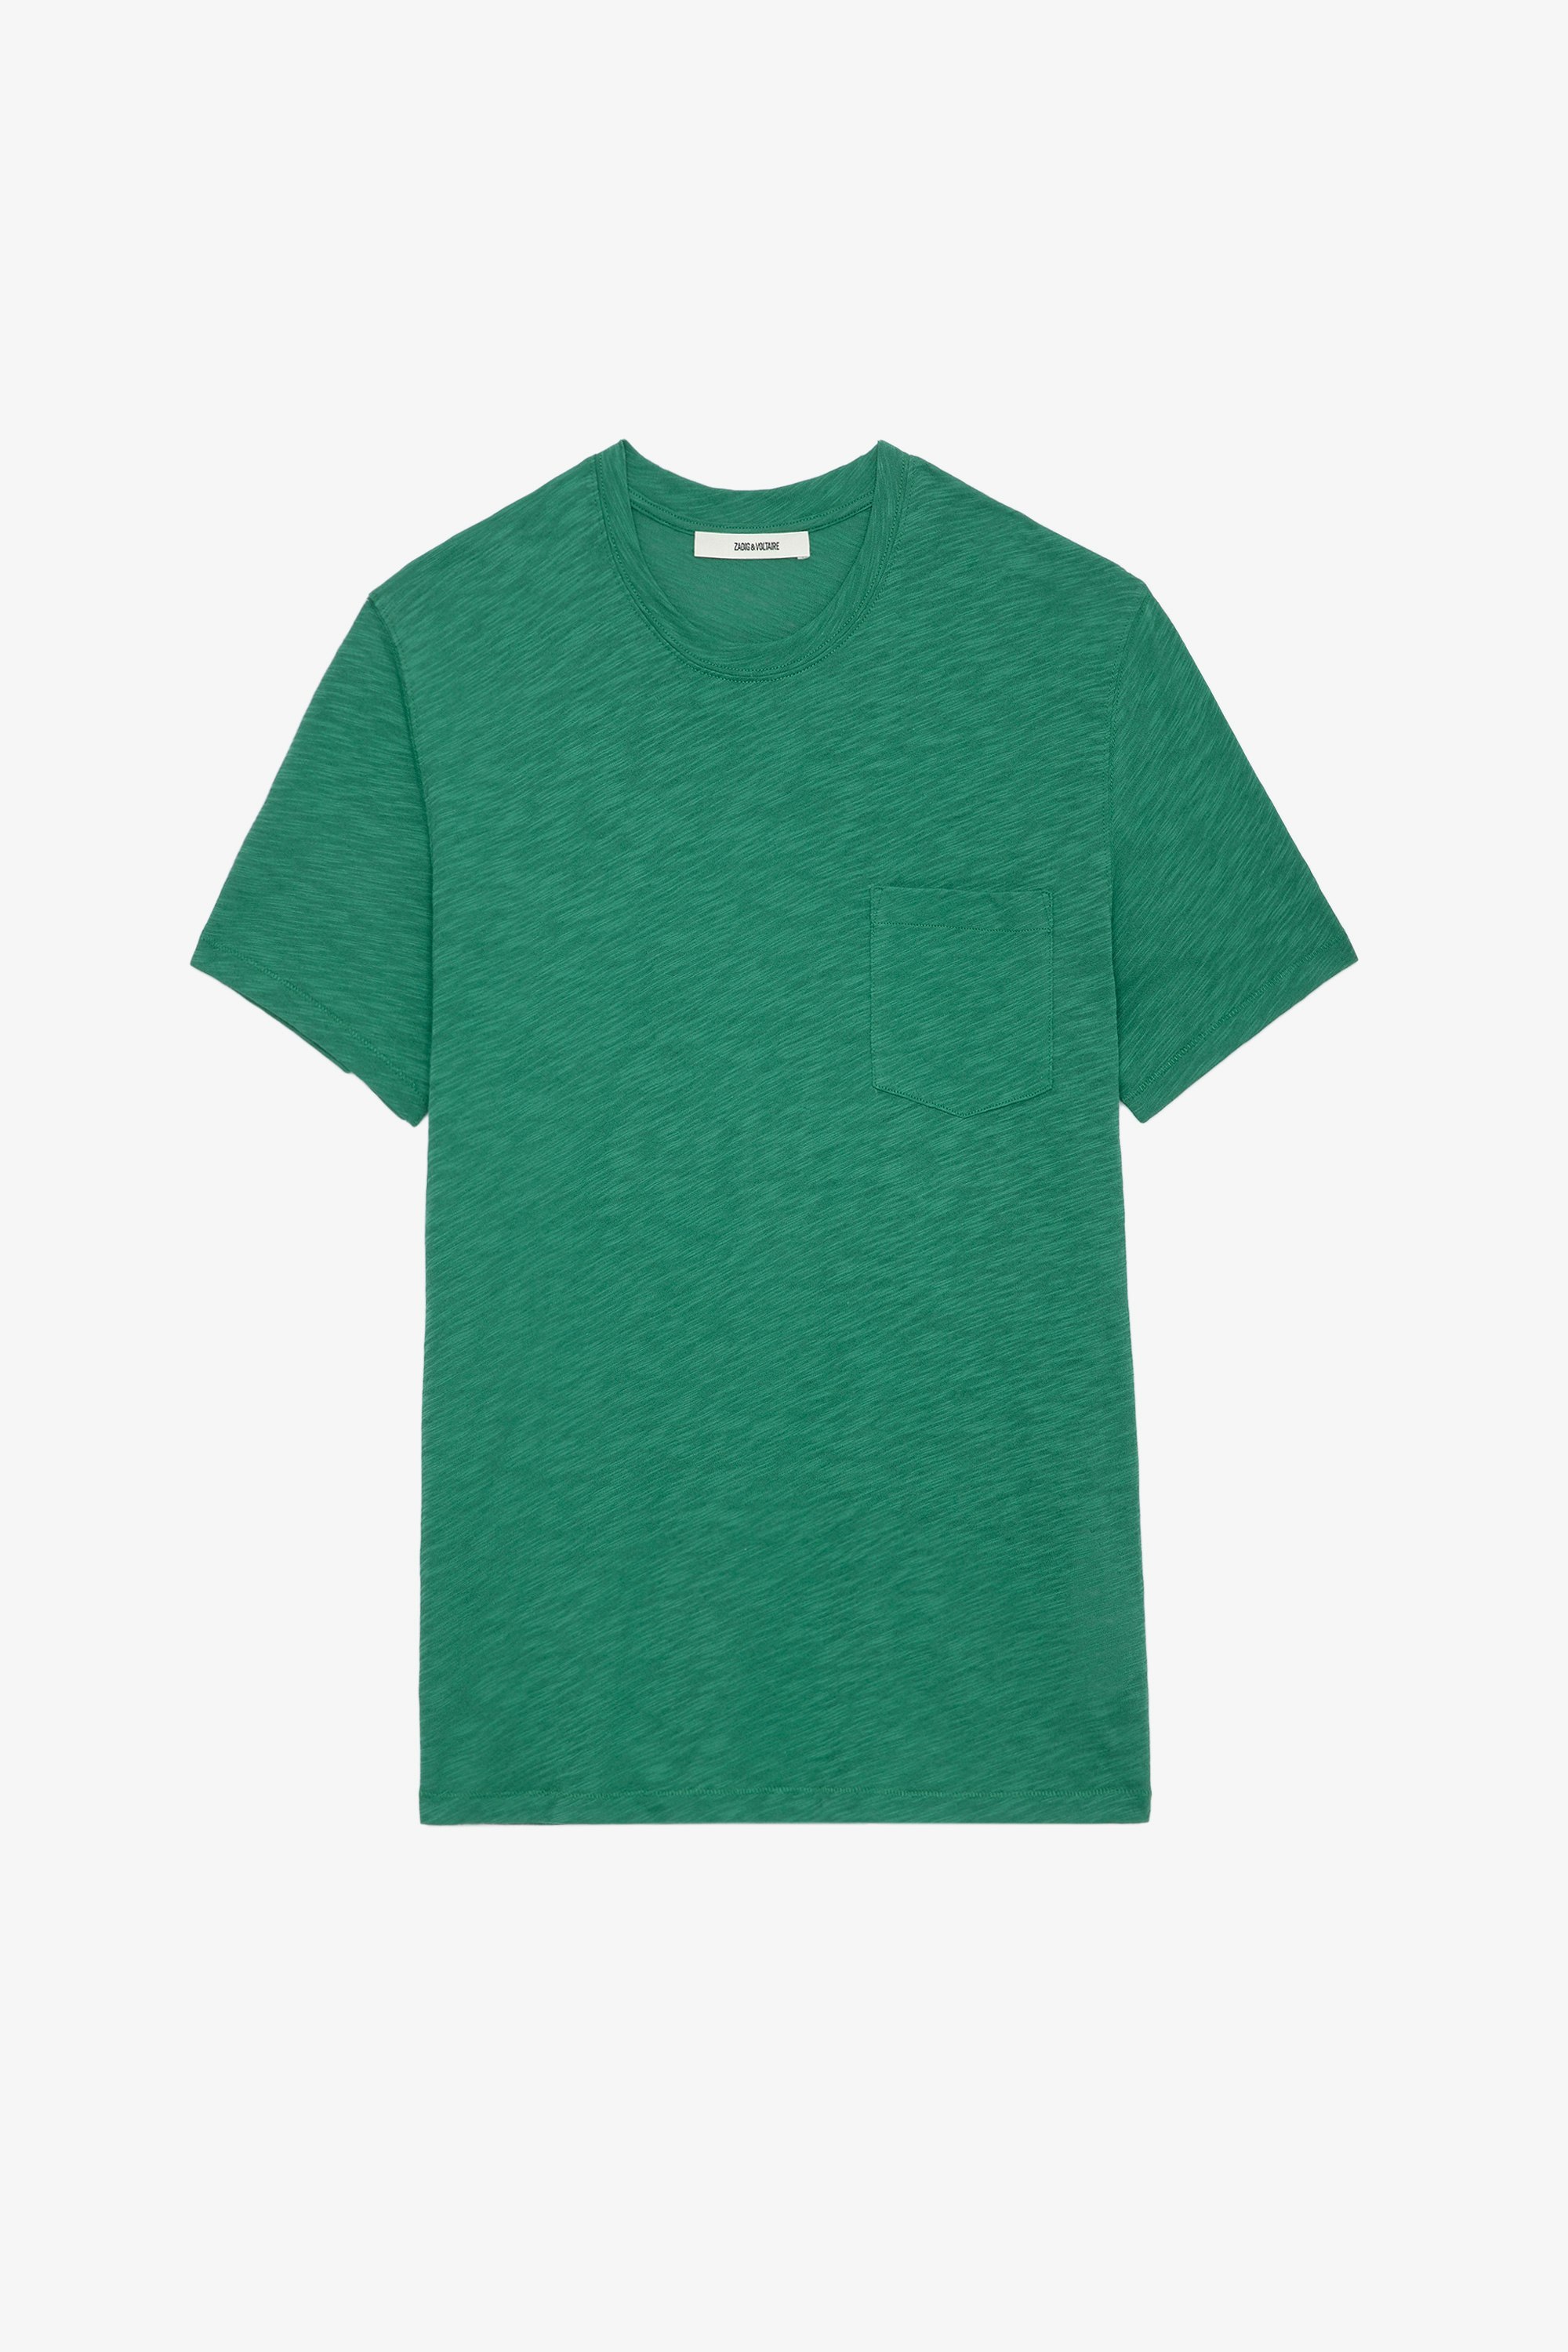 Stockholm Slub T-shirt - Green slub cotton short-sleeved T-shirt with pocket and Skull Block motif on the back.